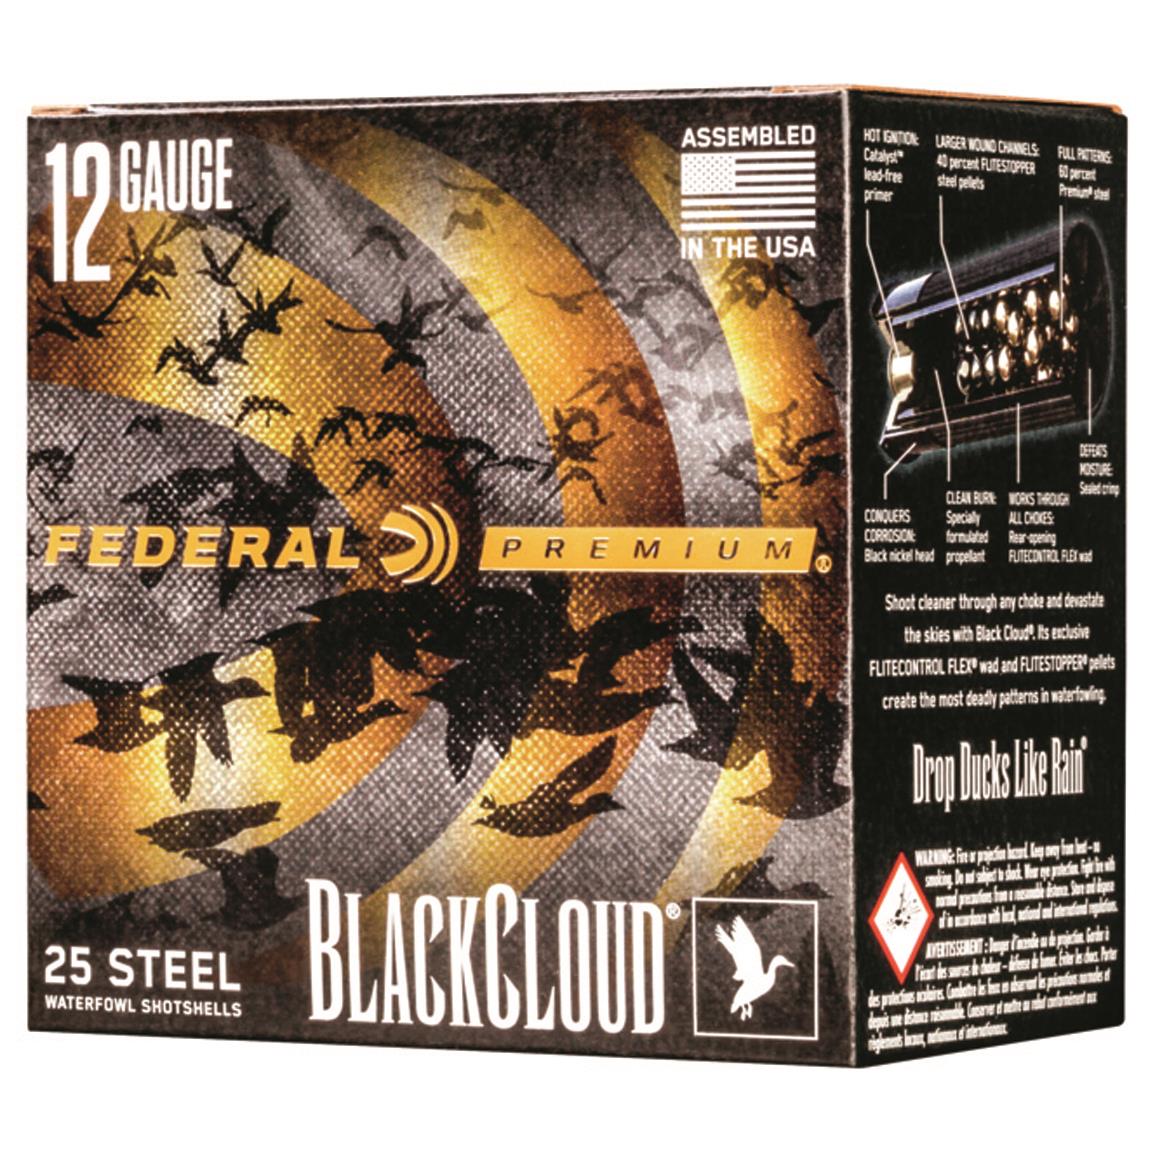 Federal Premium Black Cloud FS Steel, 12 Gauge, 3",1 1/4 oz., 250 Rounds